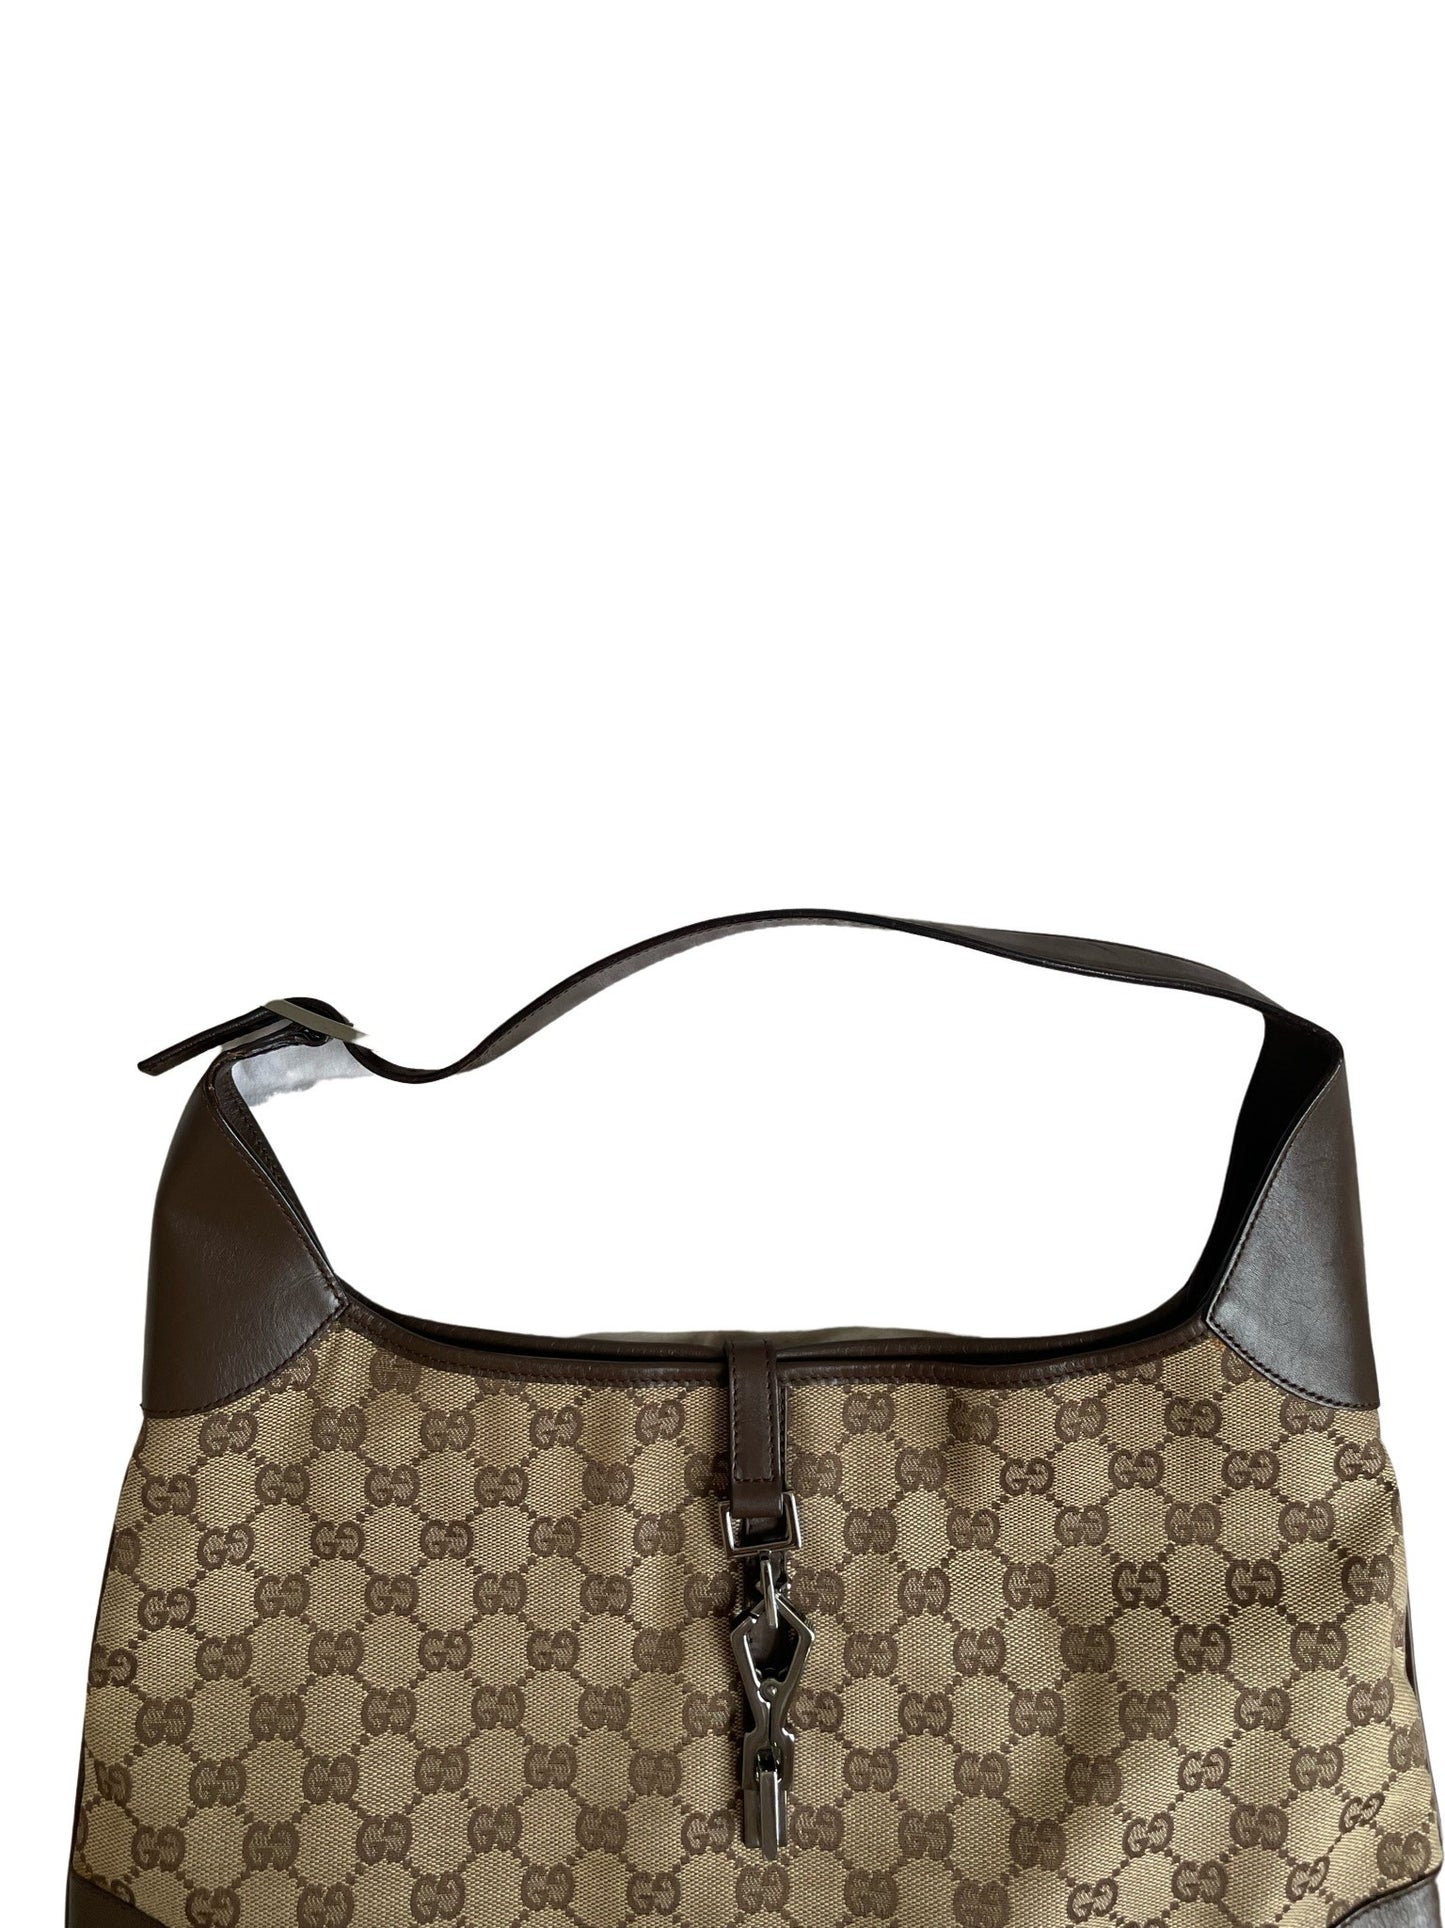 Gucci Jackie Beige & Brown Jacquard Leather Bag